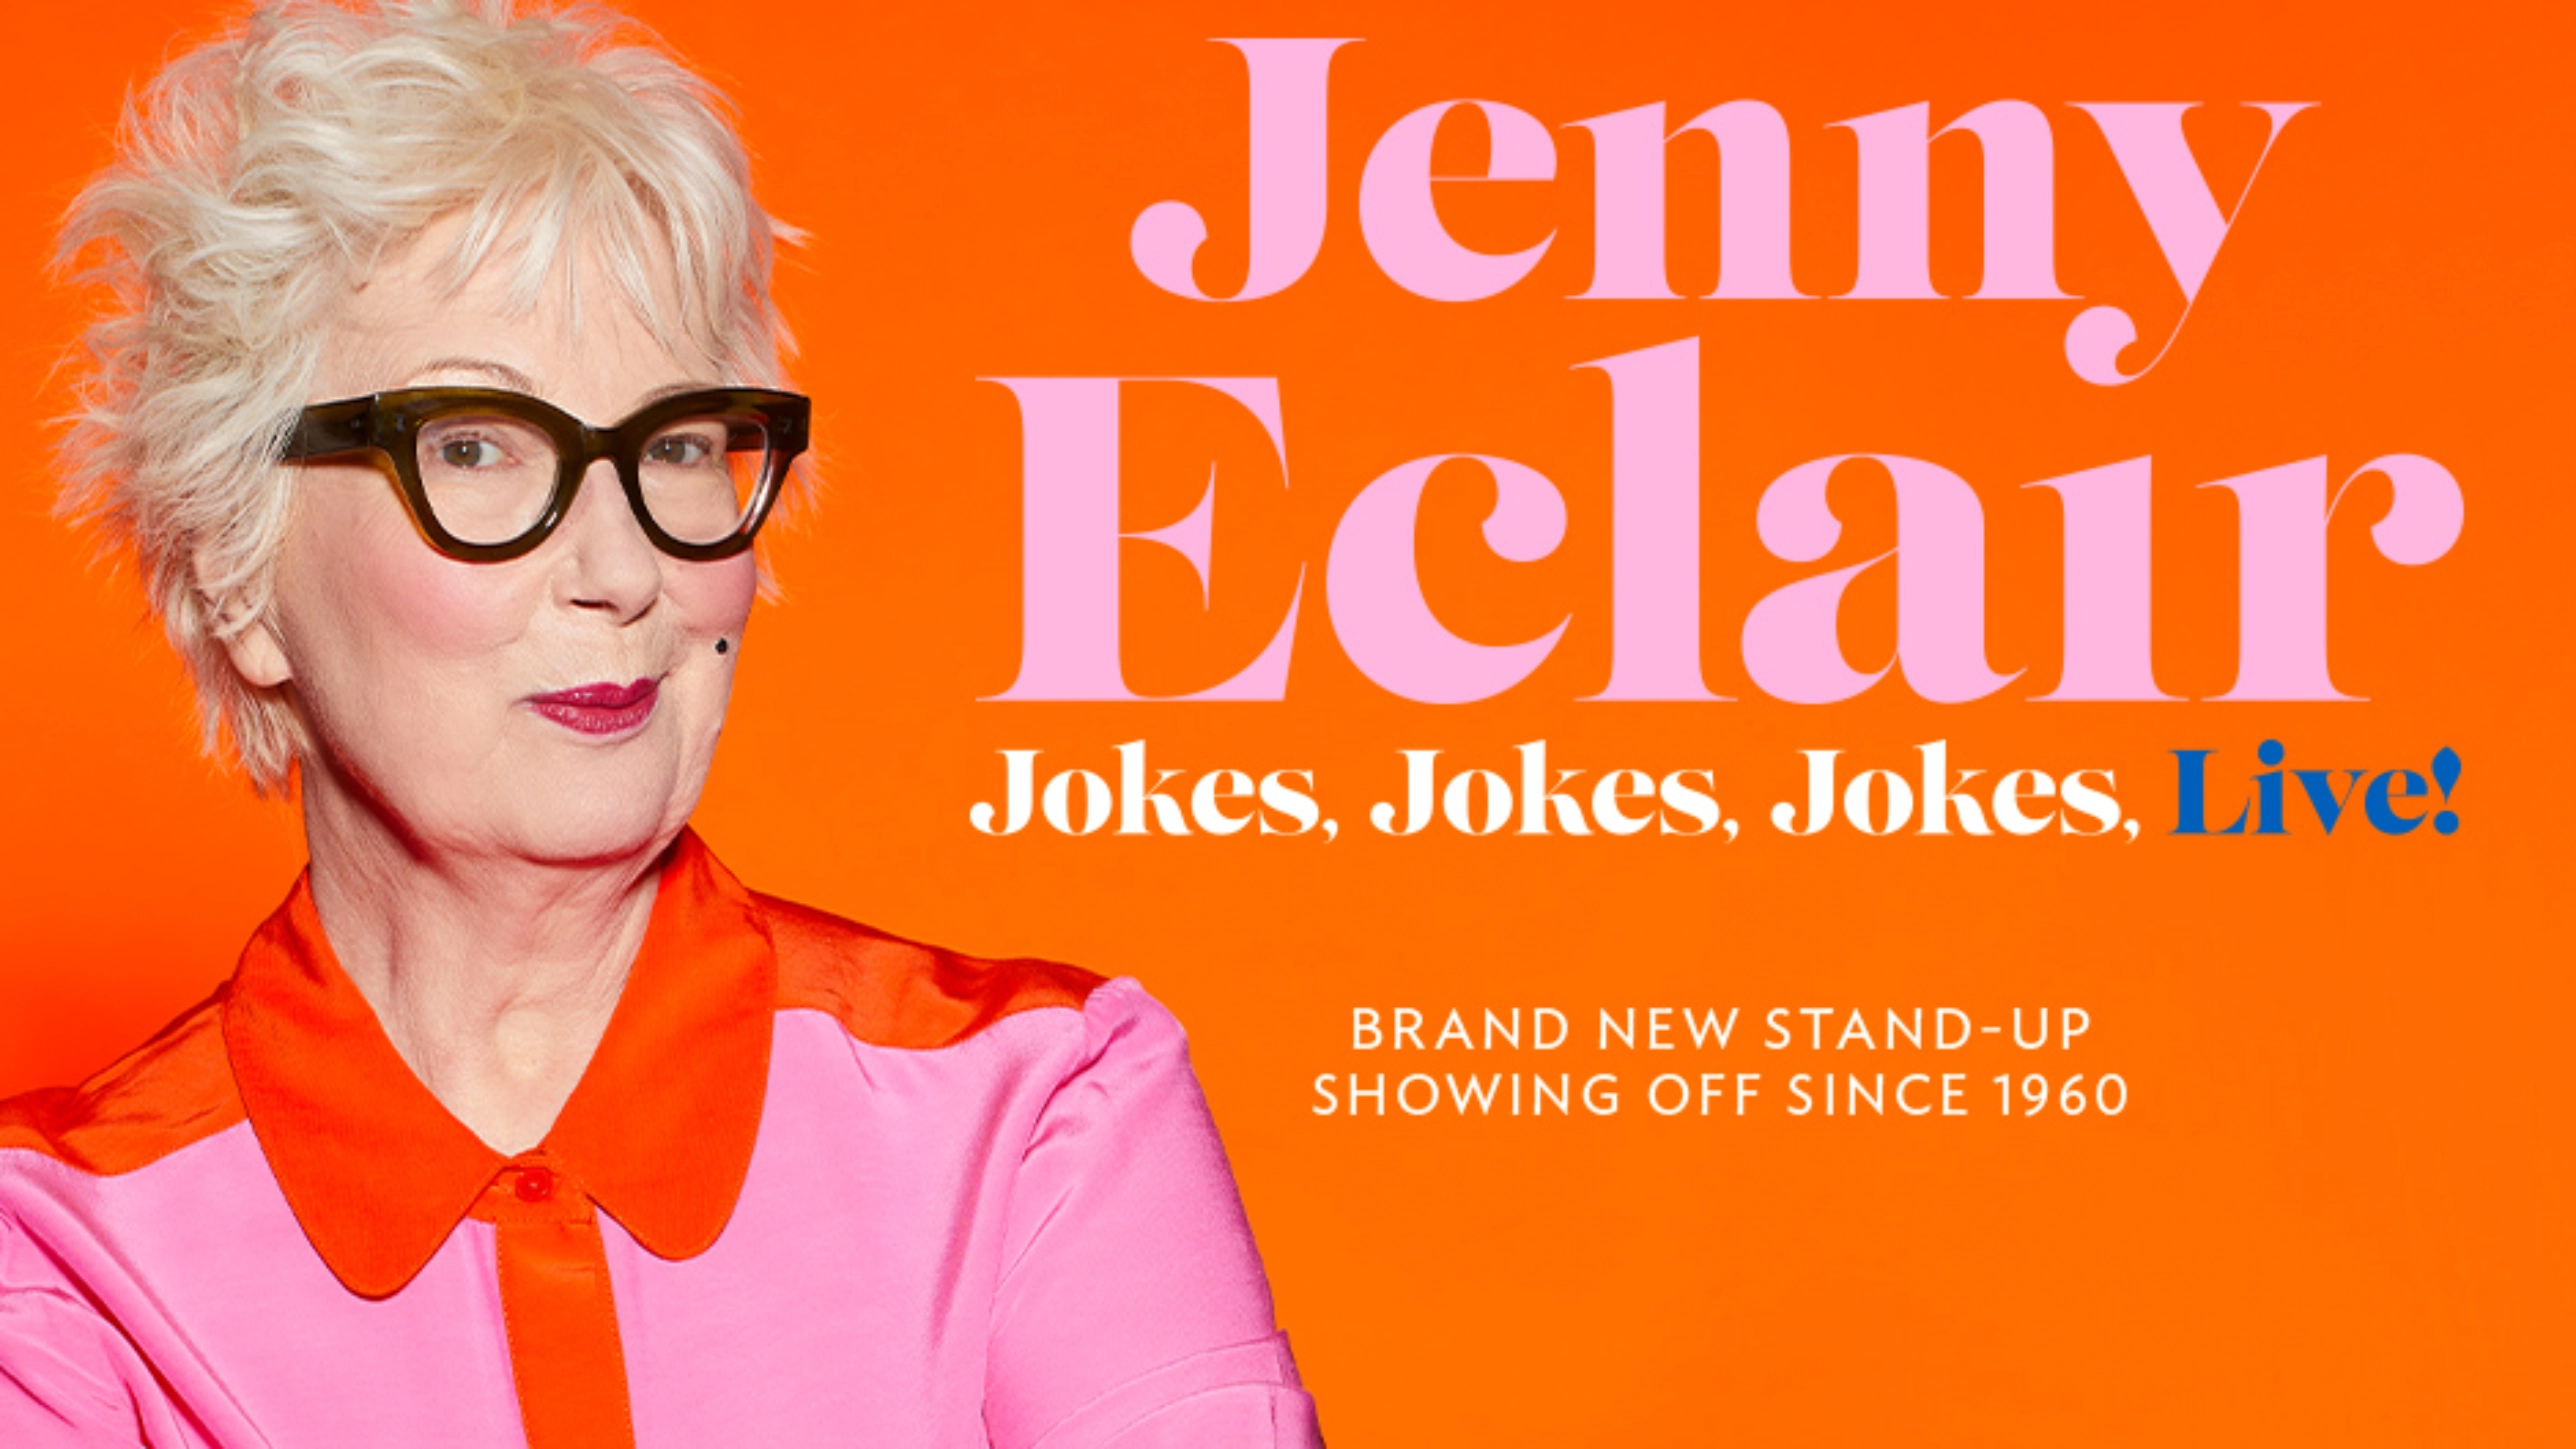 Jenny Eclair - Jokes Jokes Jokes Live!